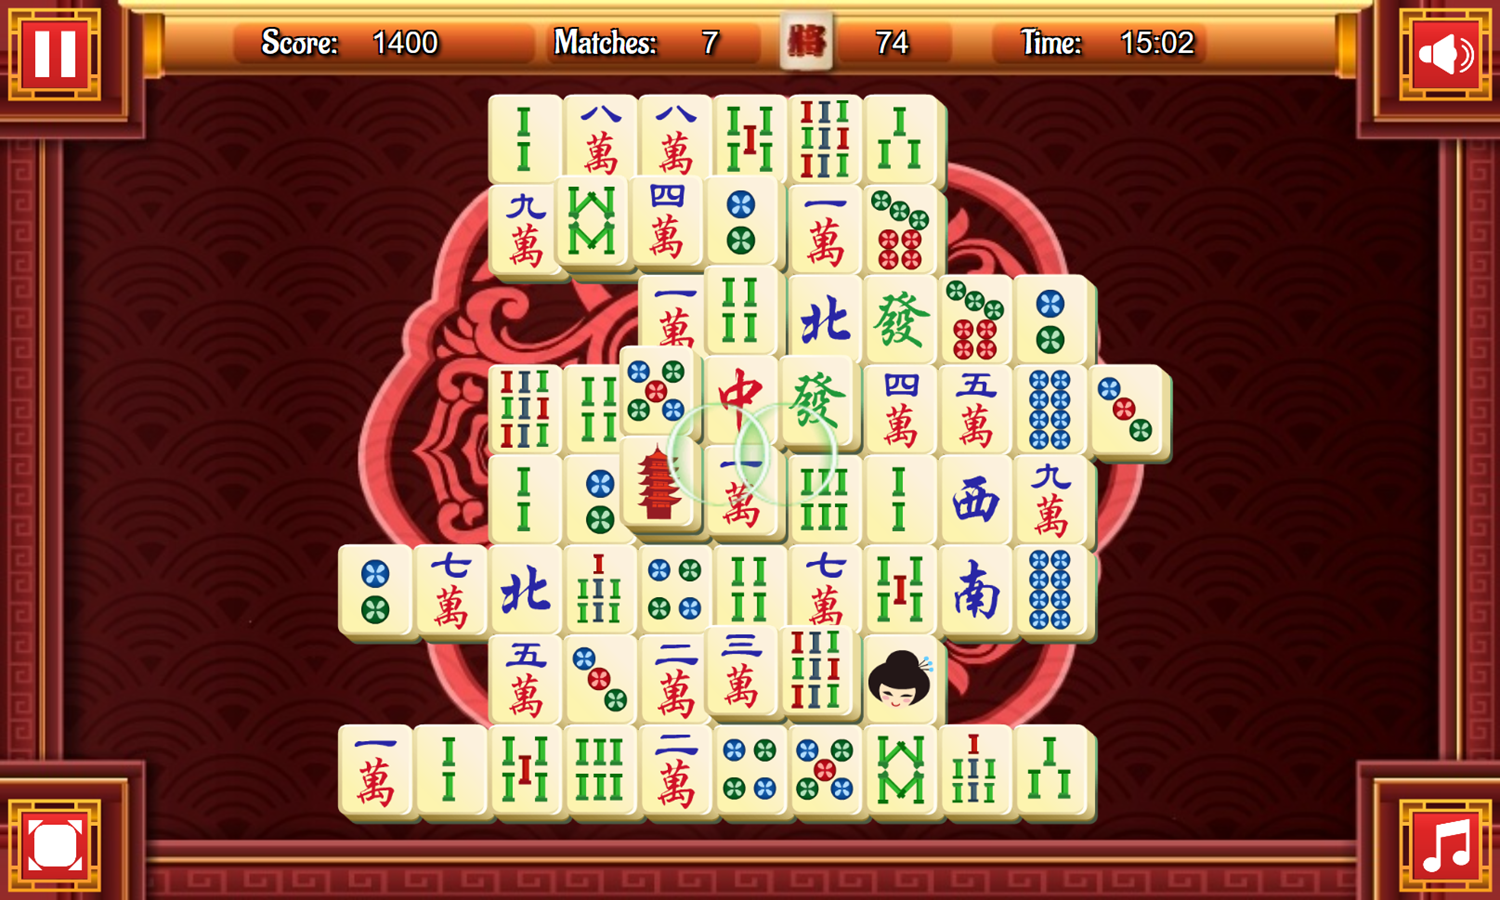 Original Mahjongg Game Play Screenshot.